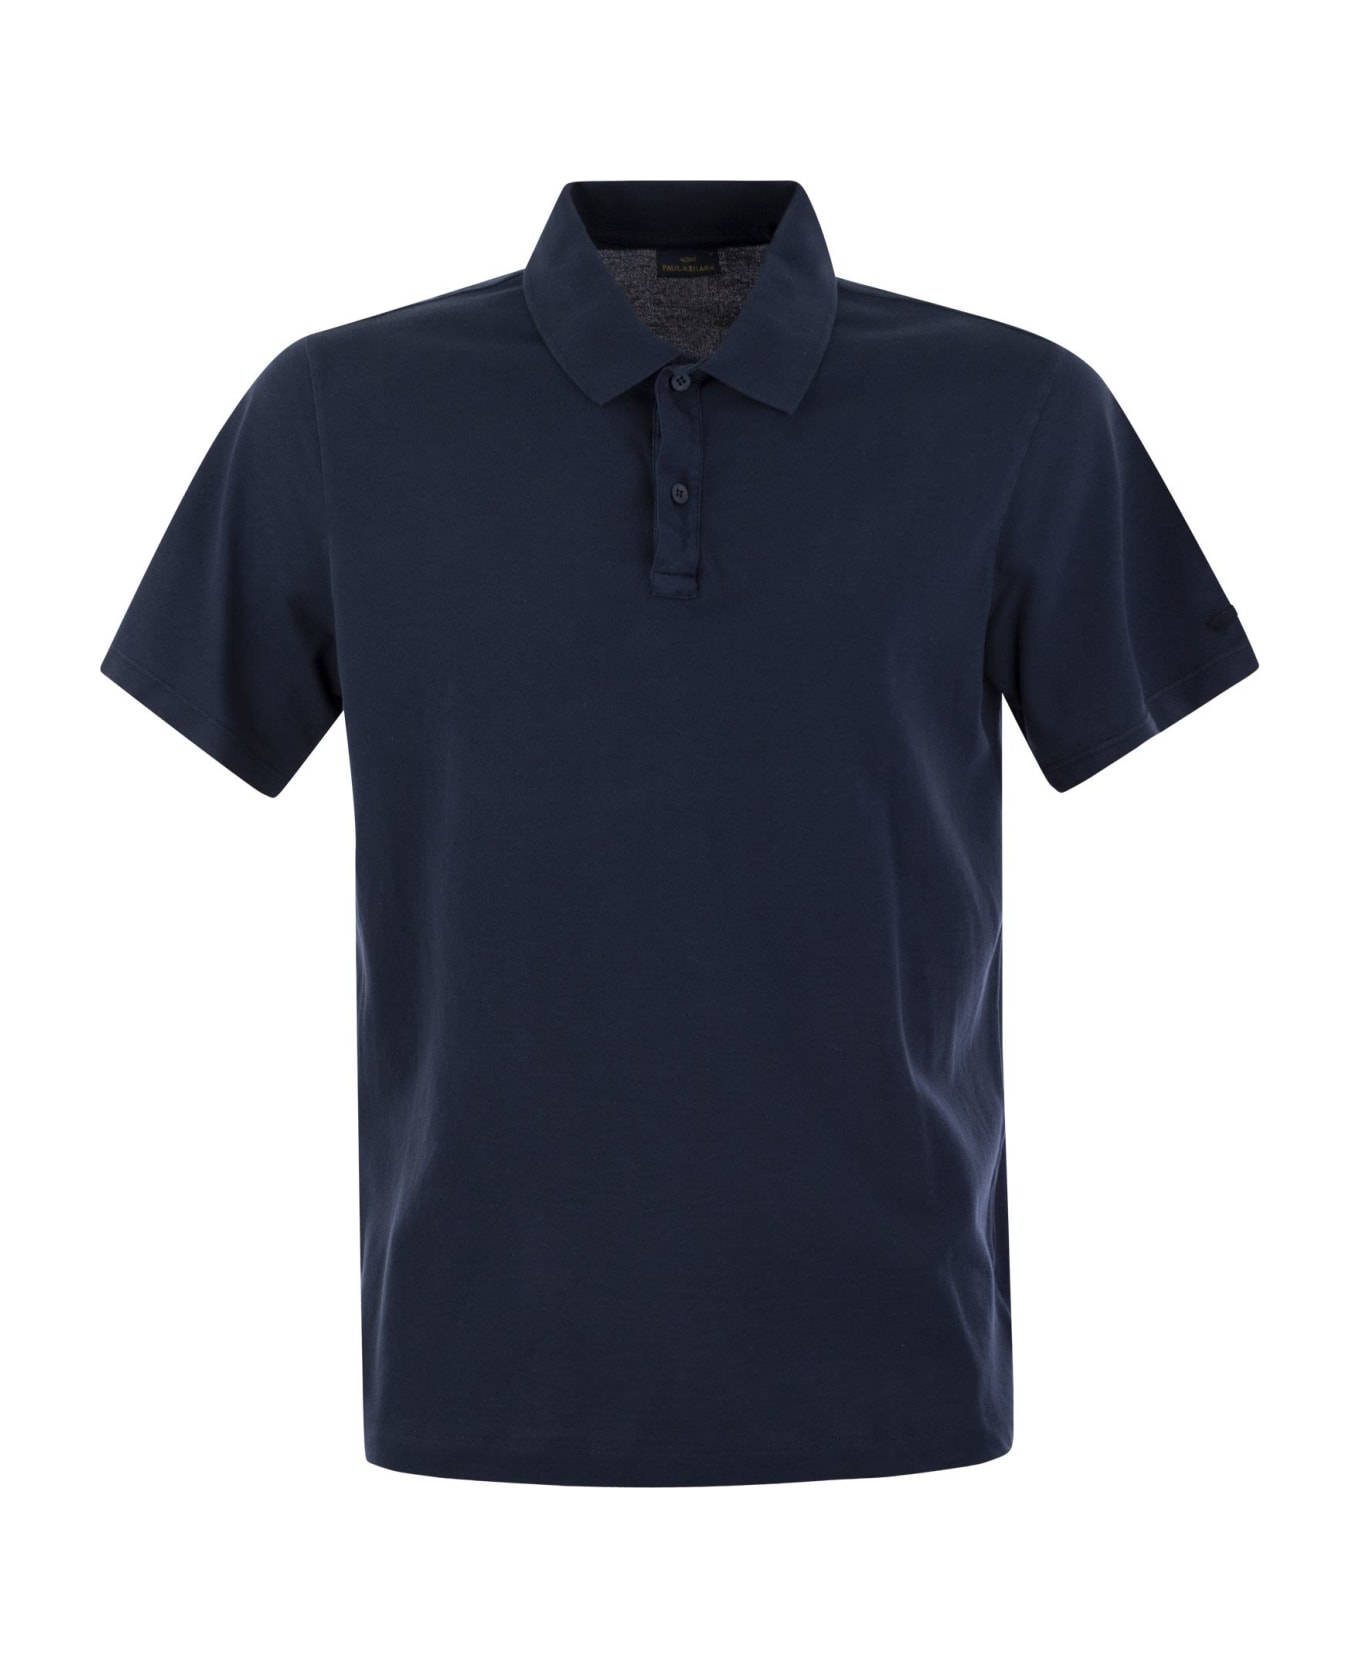 Paul&Shark Garment-dyed Pique Cotton Polo Shirt - Blue